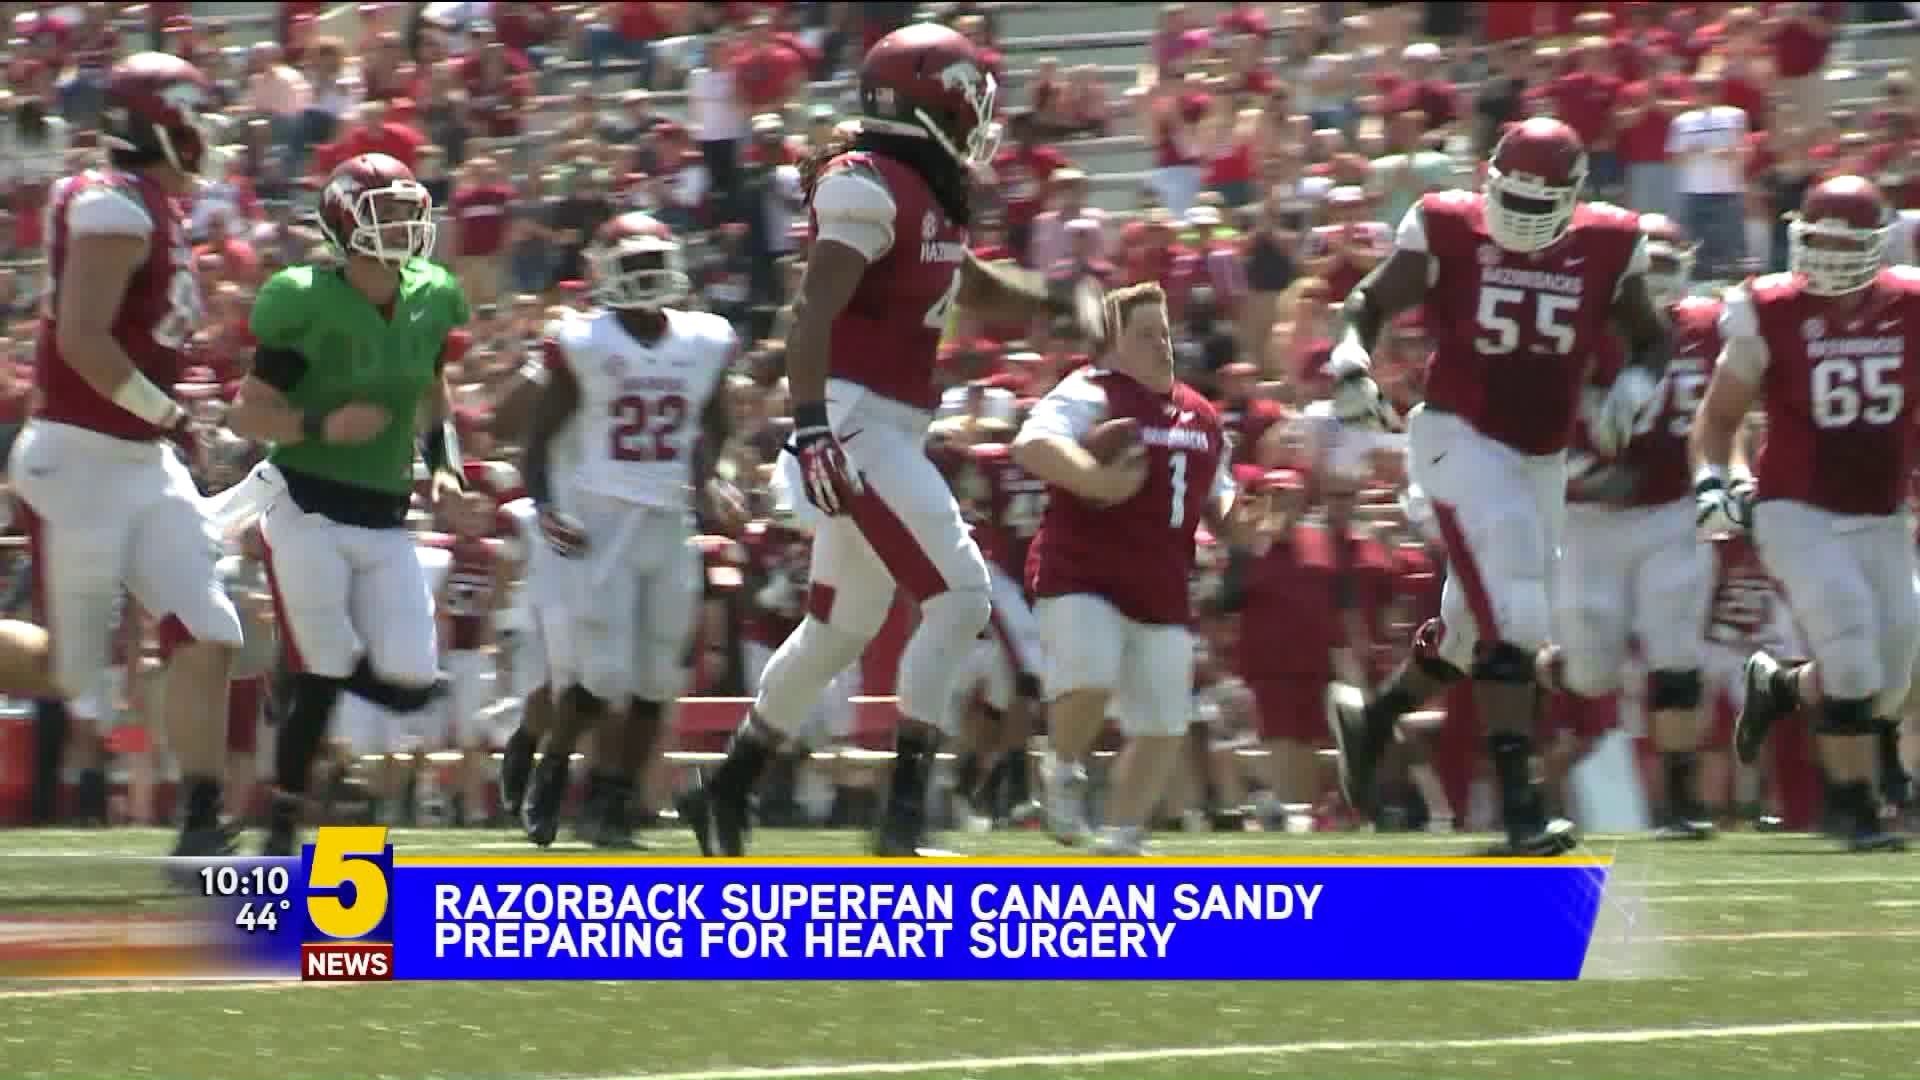 Razorback Super Fan Canann Shandy Preparing For Heart Surgery